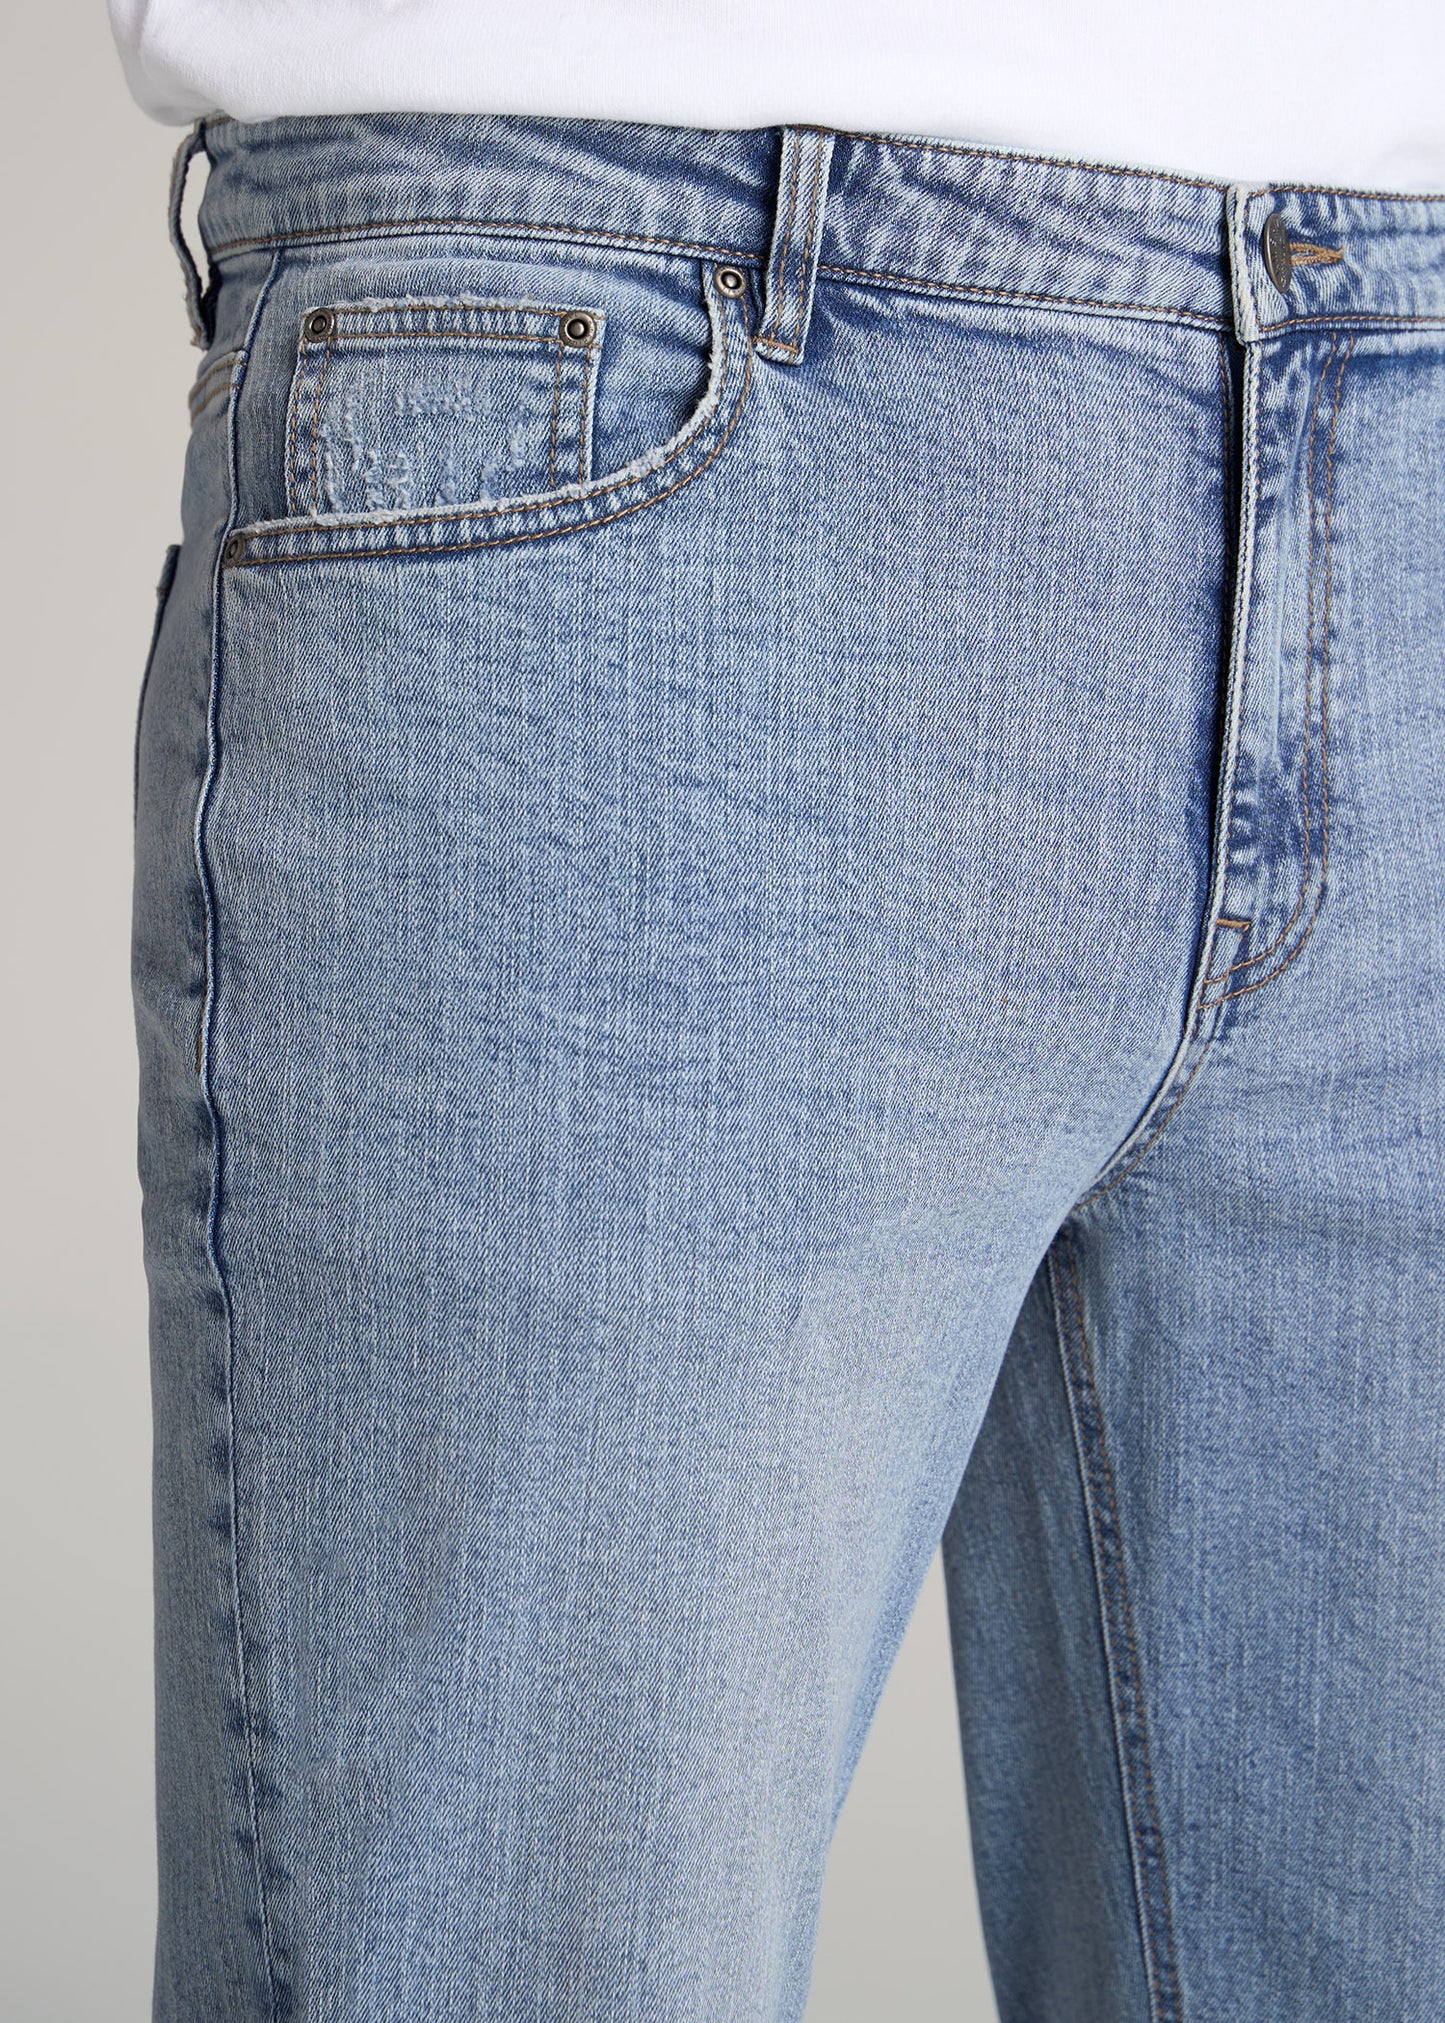       American-Tall-Men-J1-Jeans-Retro-Blue-pocket